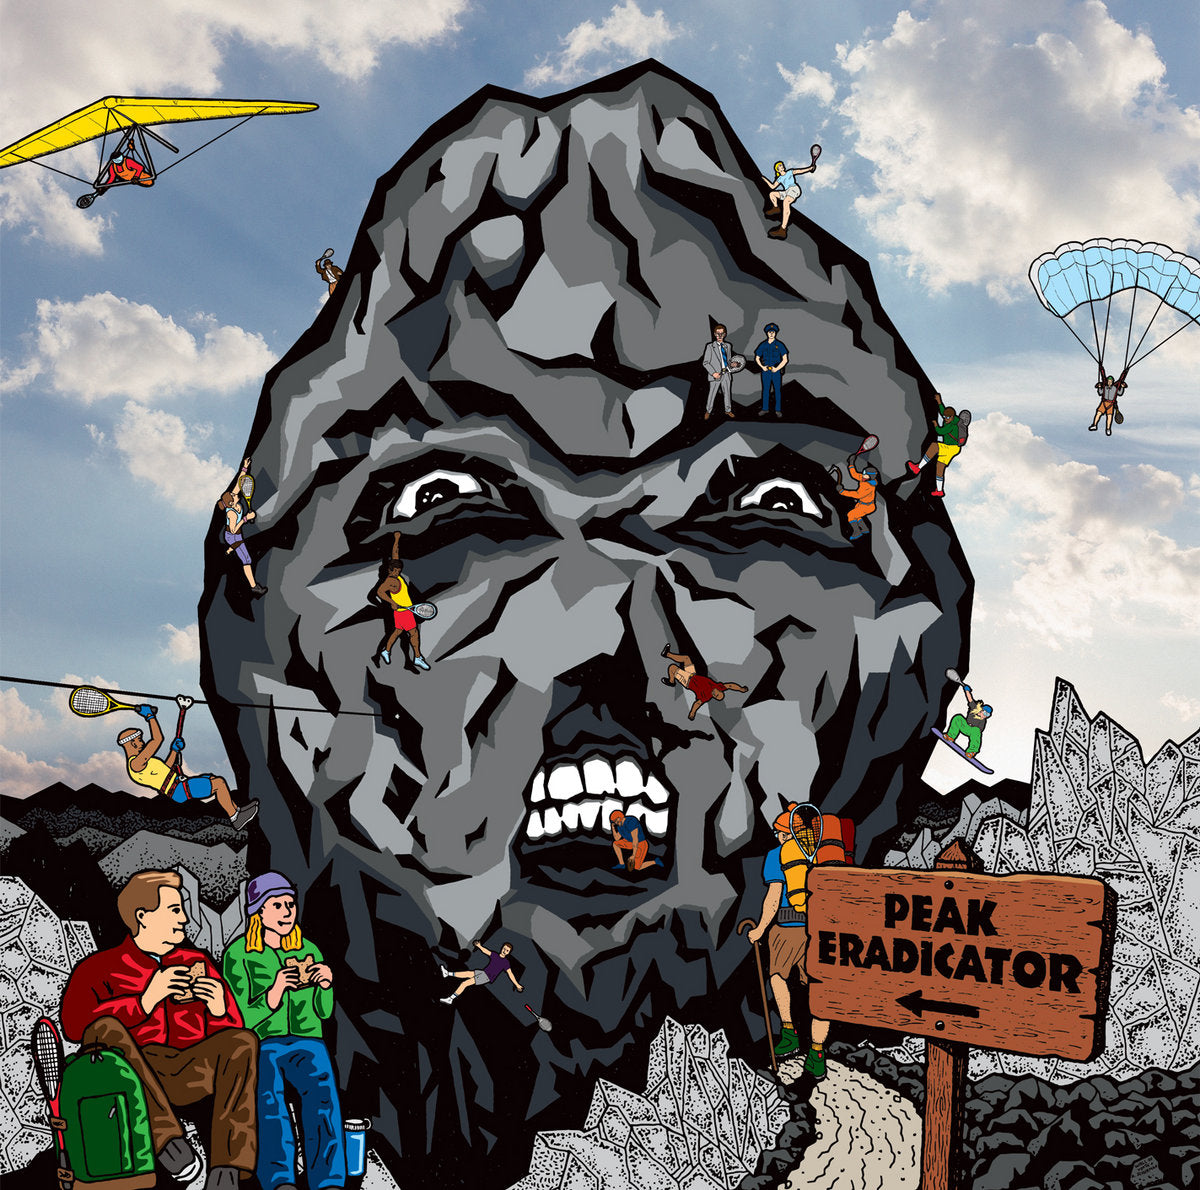 Music: The Eradicator "Peak Eradicator" Compact Disc